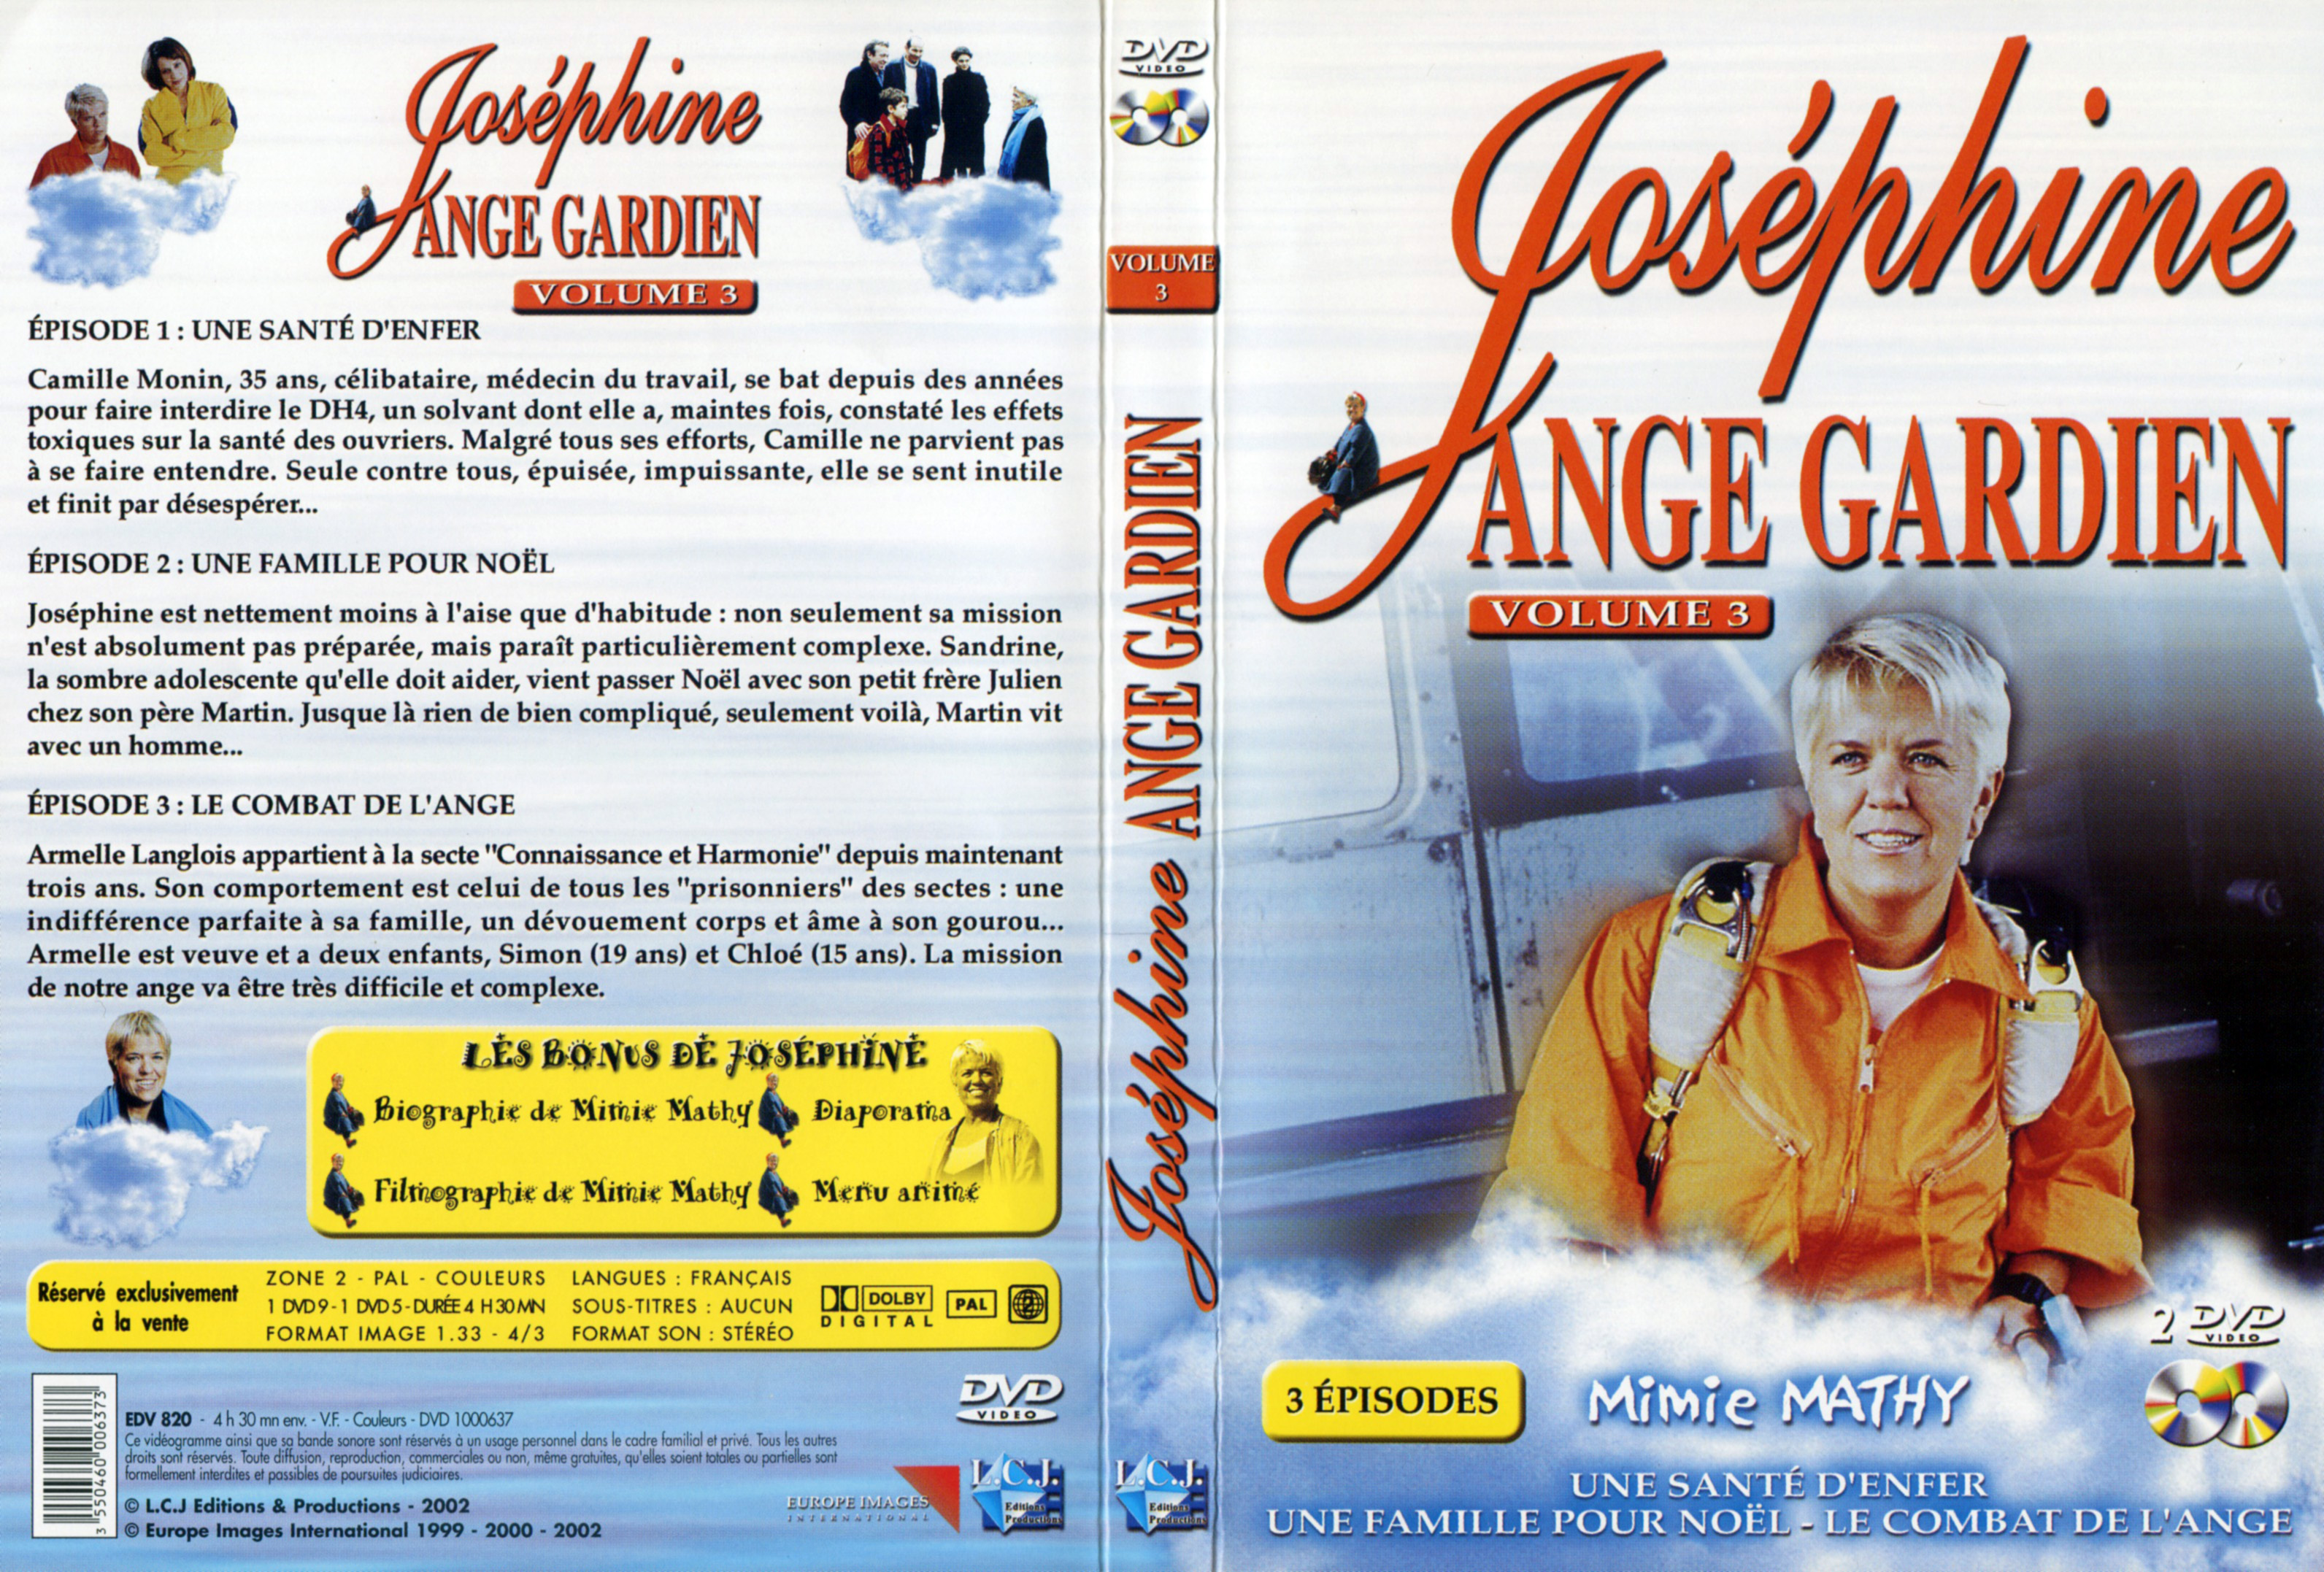 Jaquette DVD Josephine ange gardien vol 03 v2